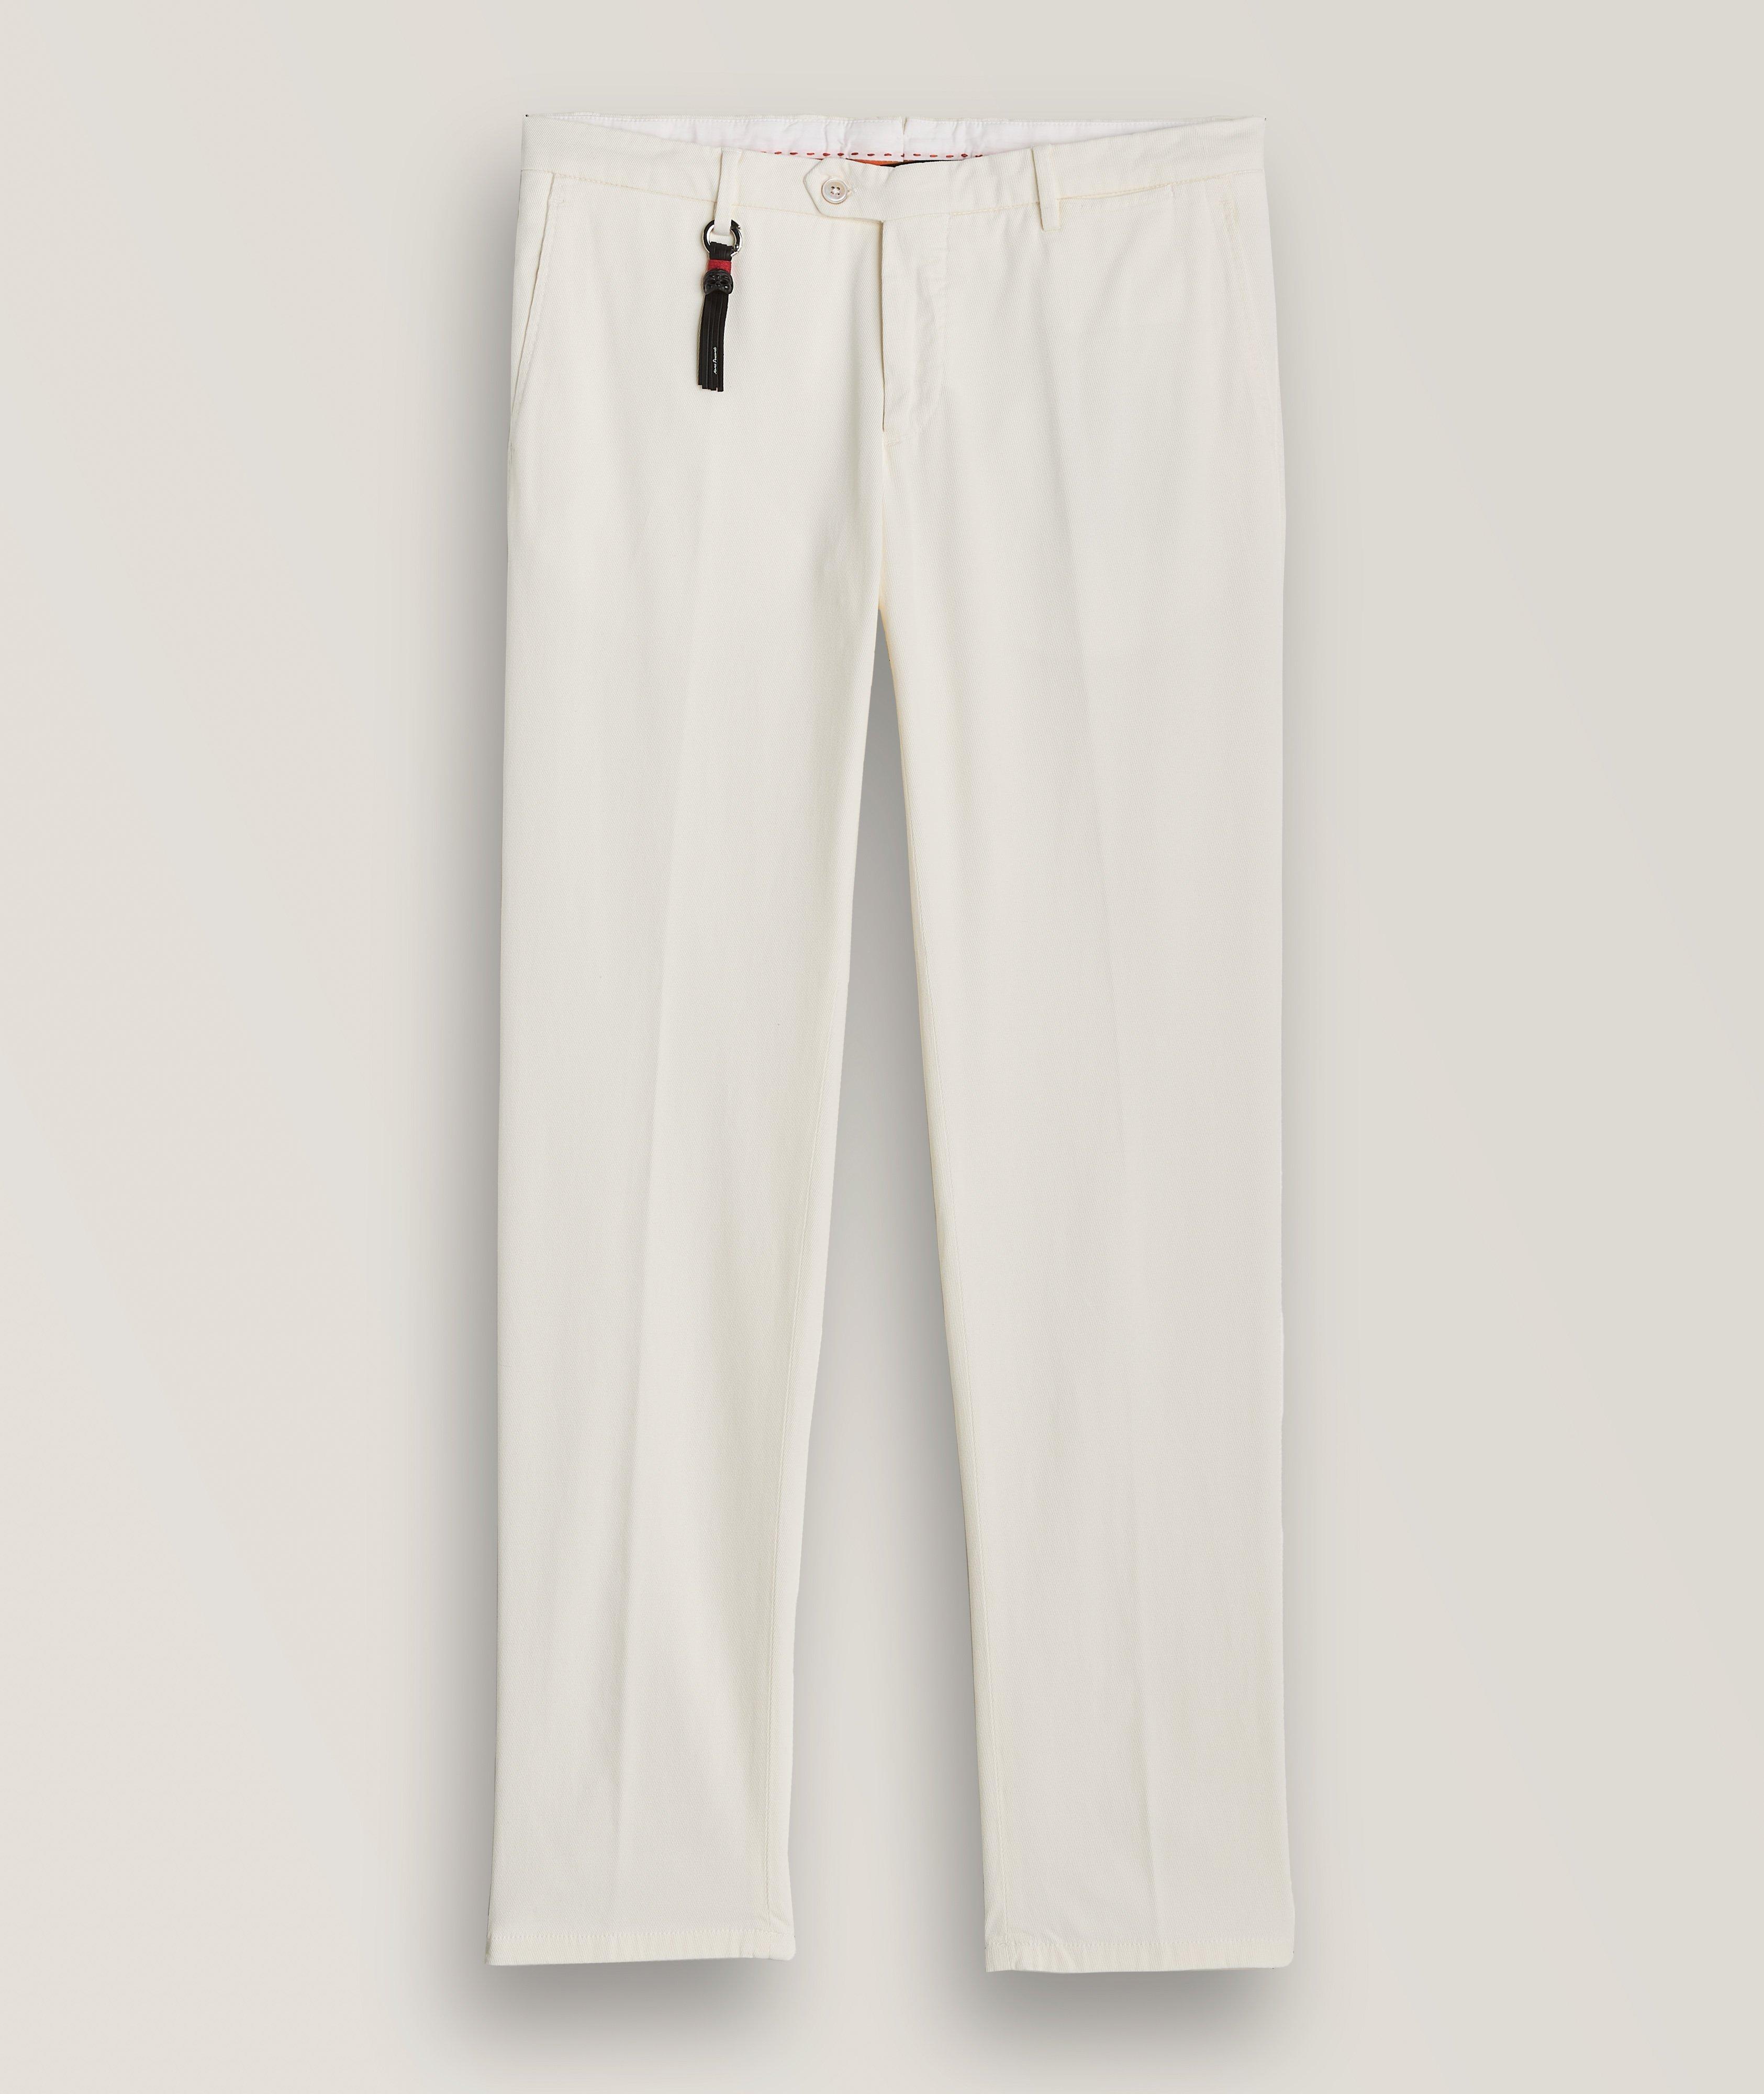 Nerano 1 Cotton-Blend Twill Pants image 0